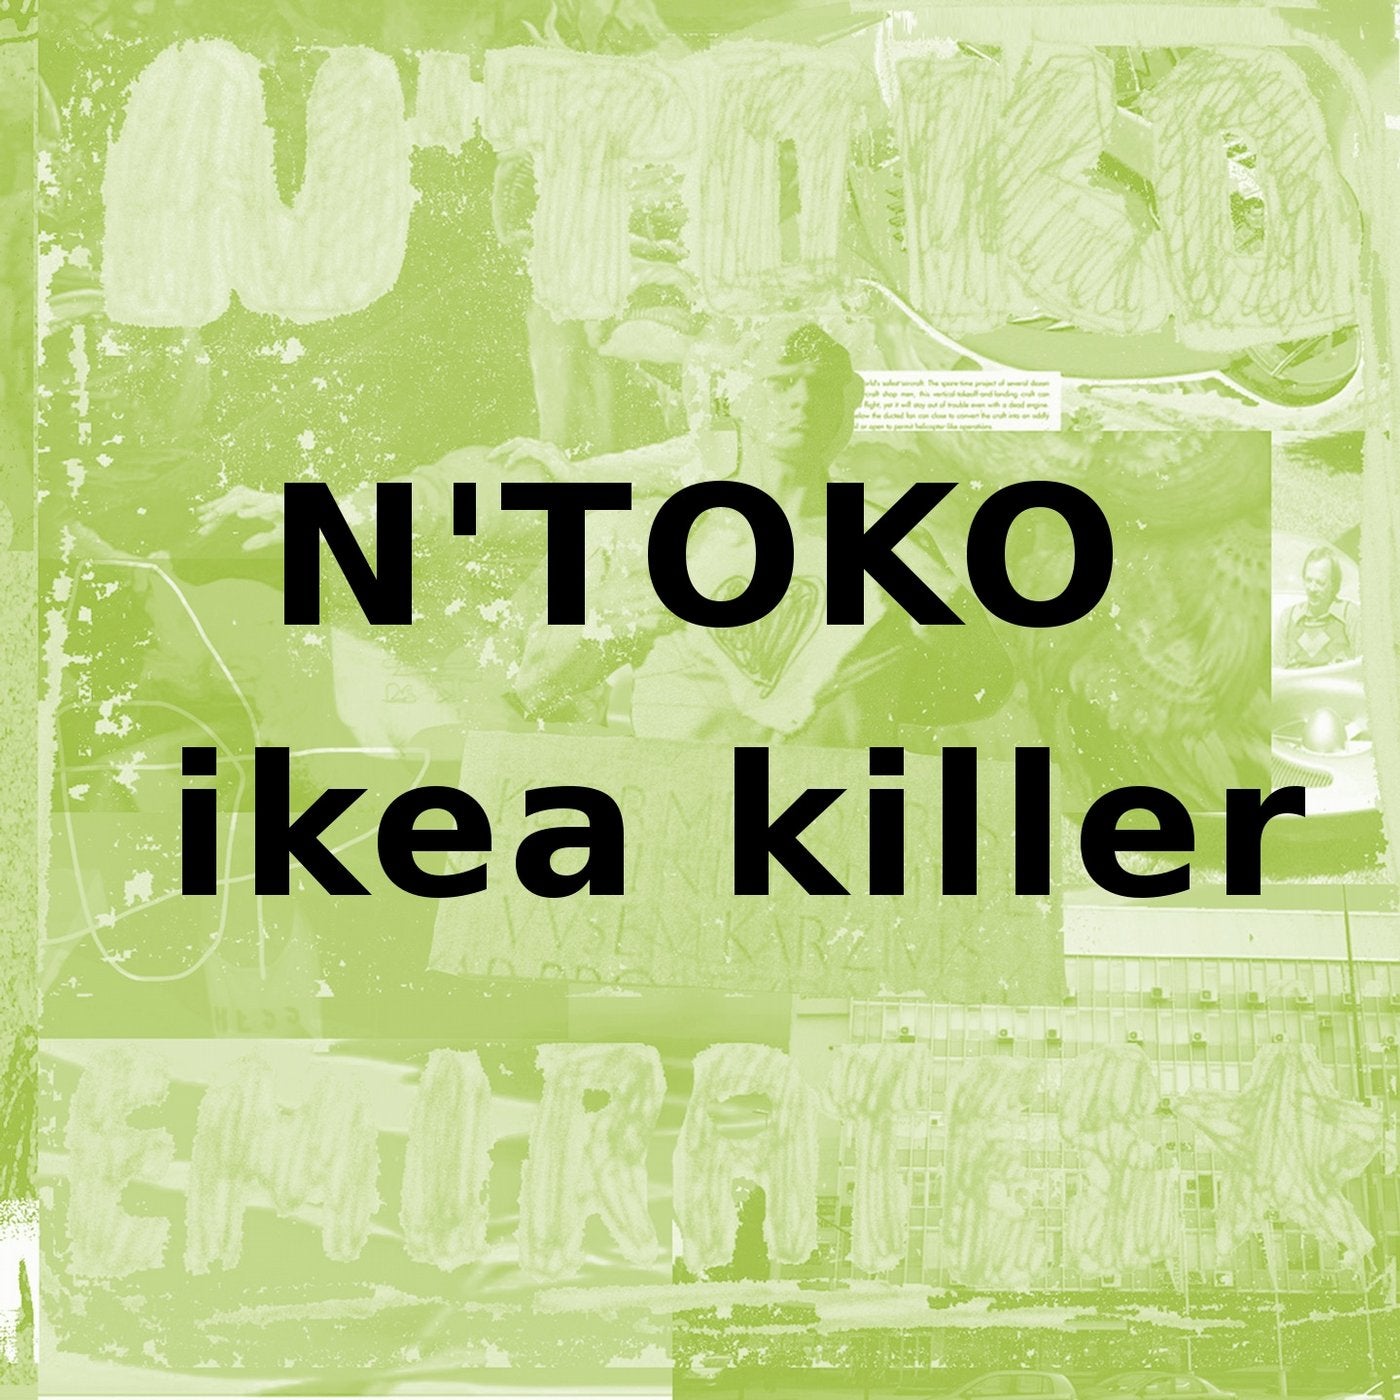 Ikea Killer